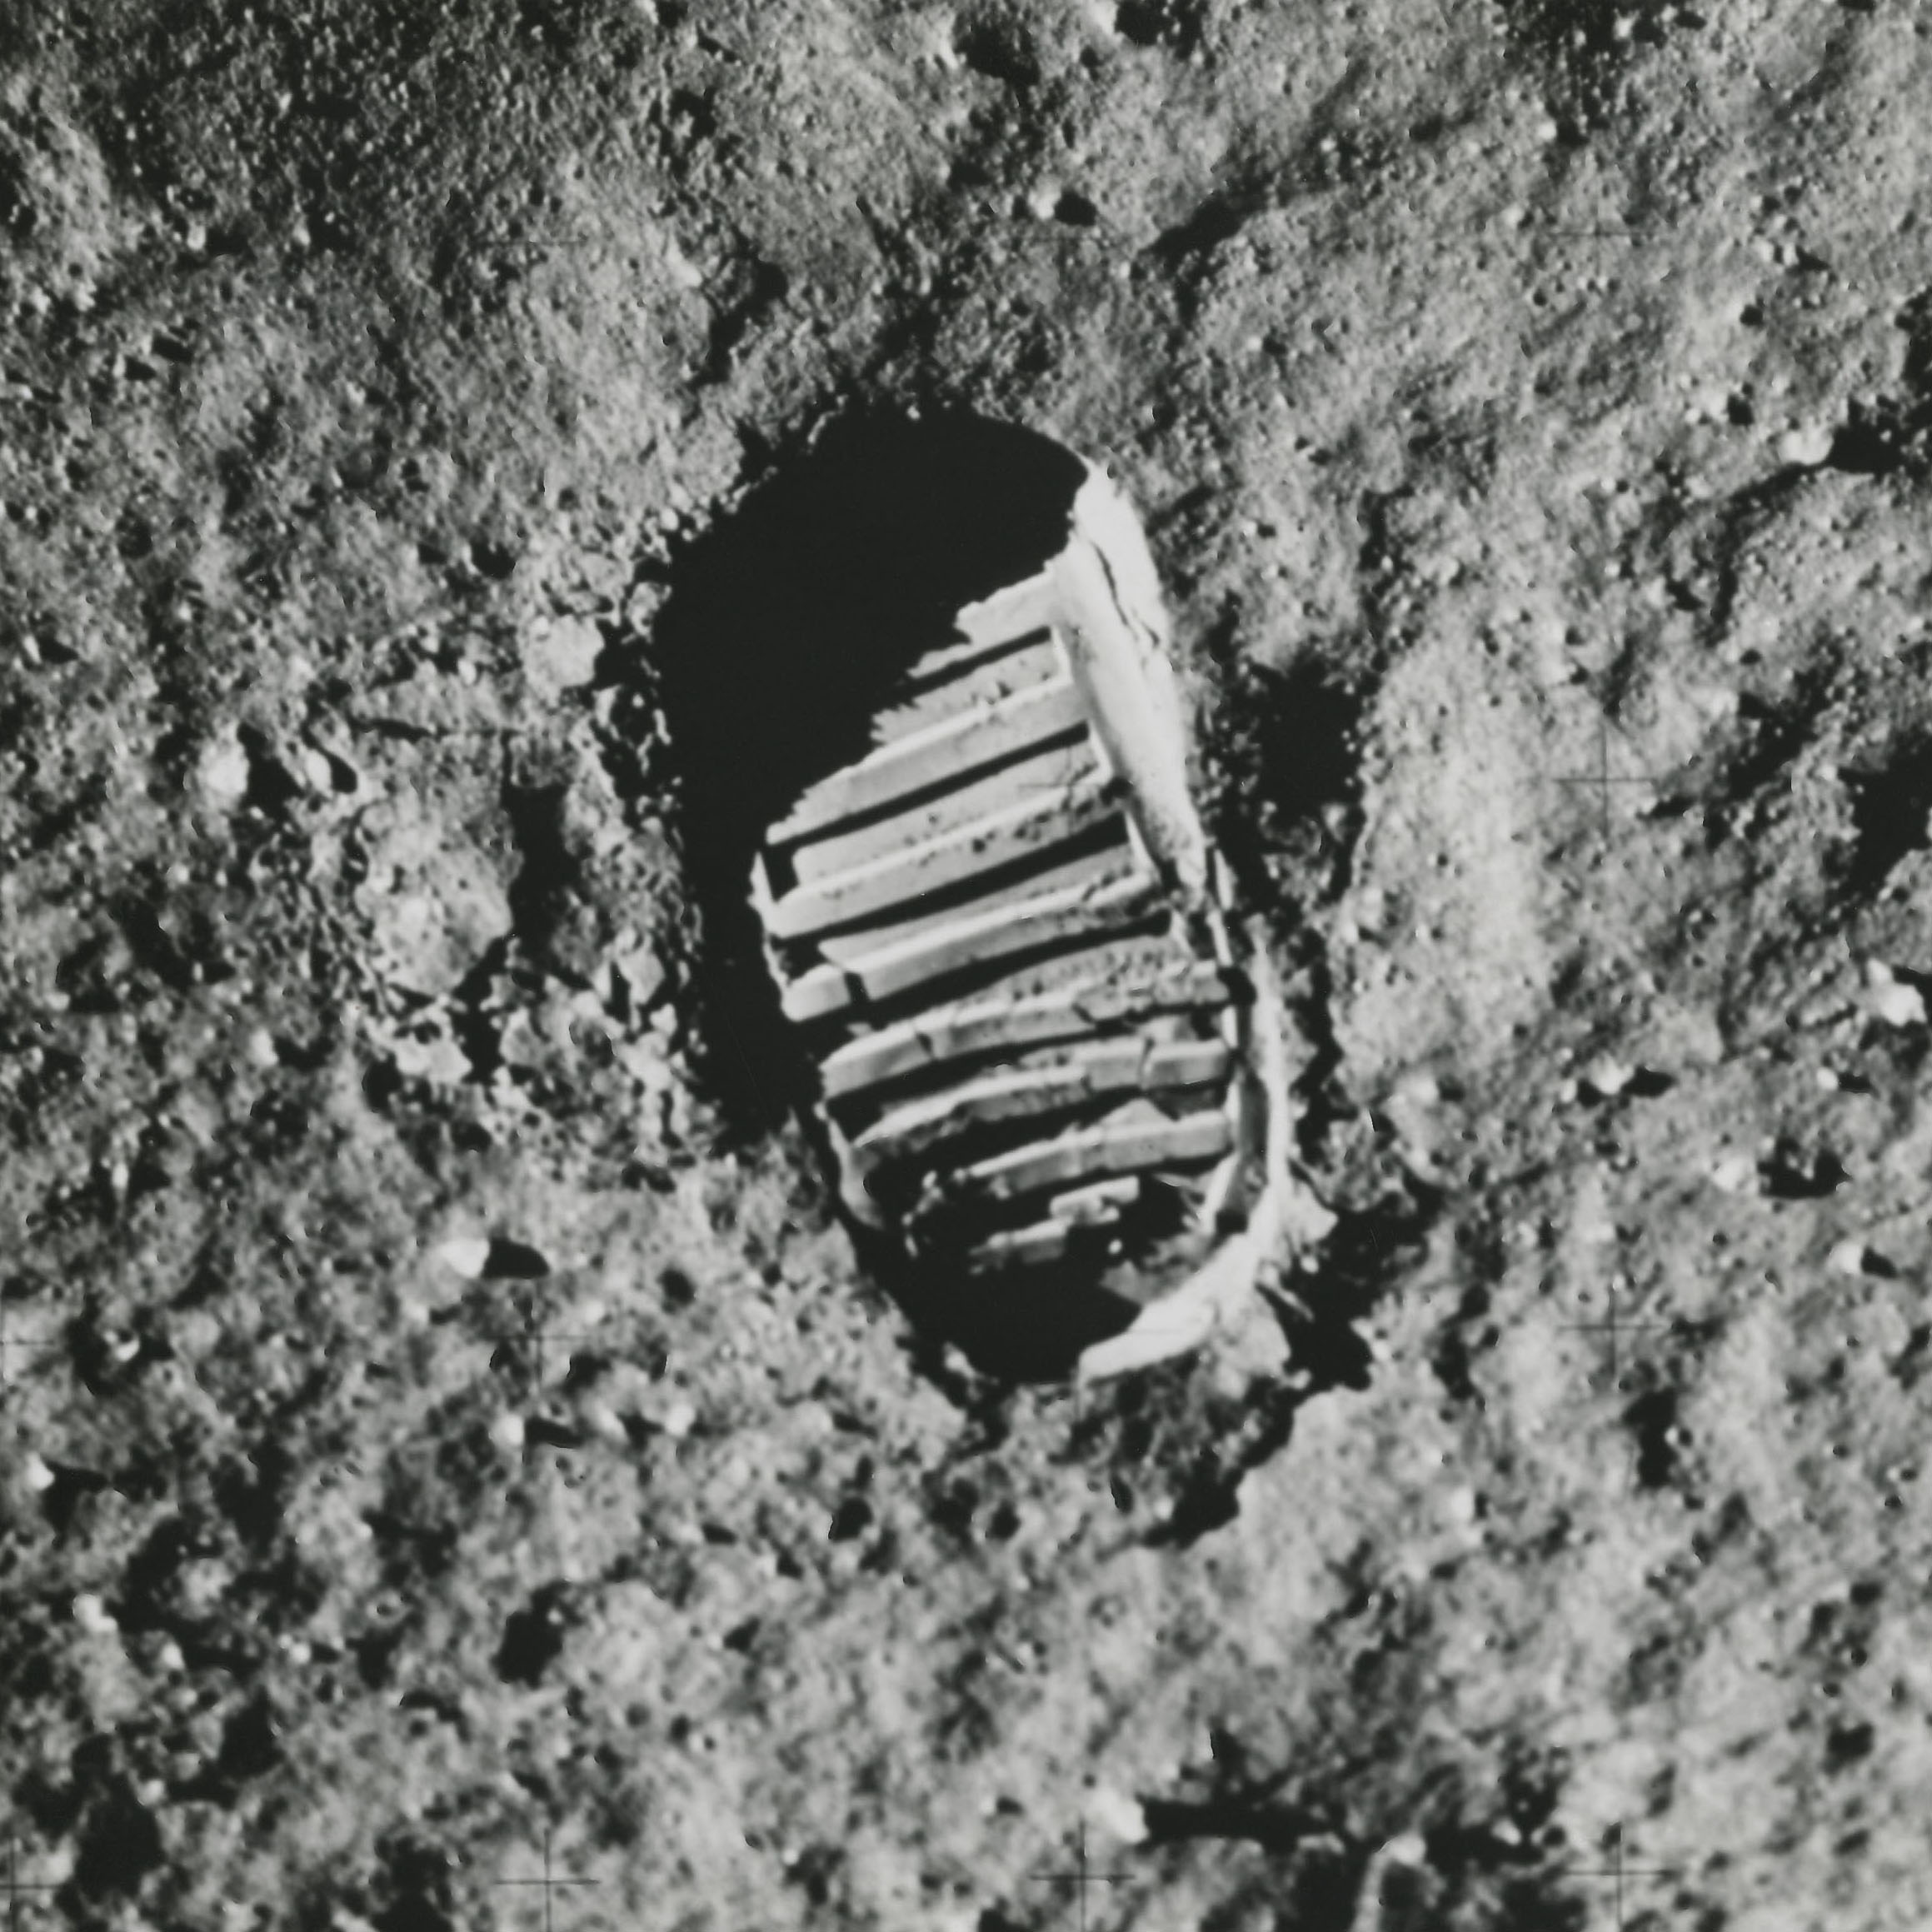 NASA photo of a footprint on the moon.